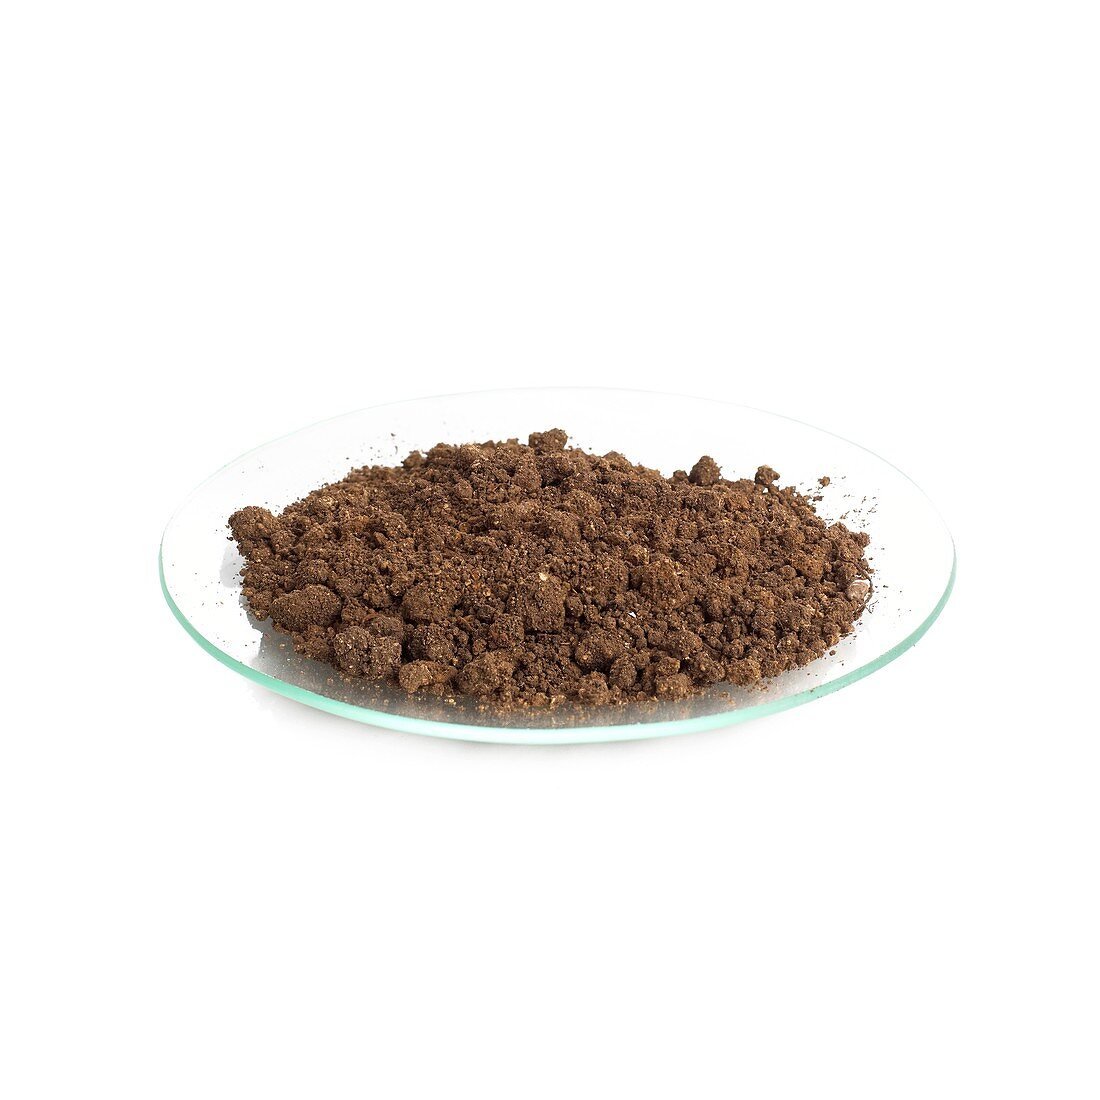 Calcareous soil